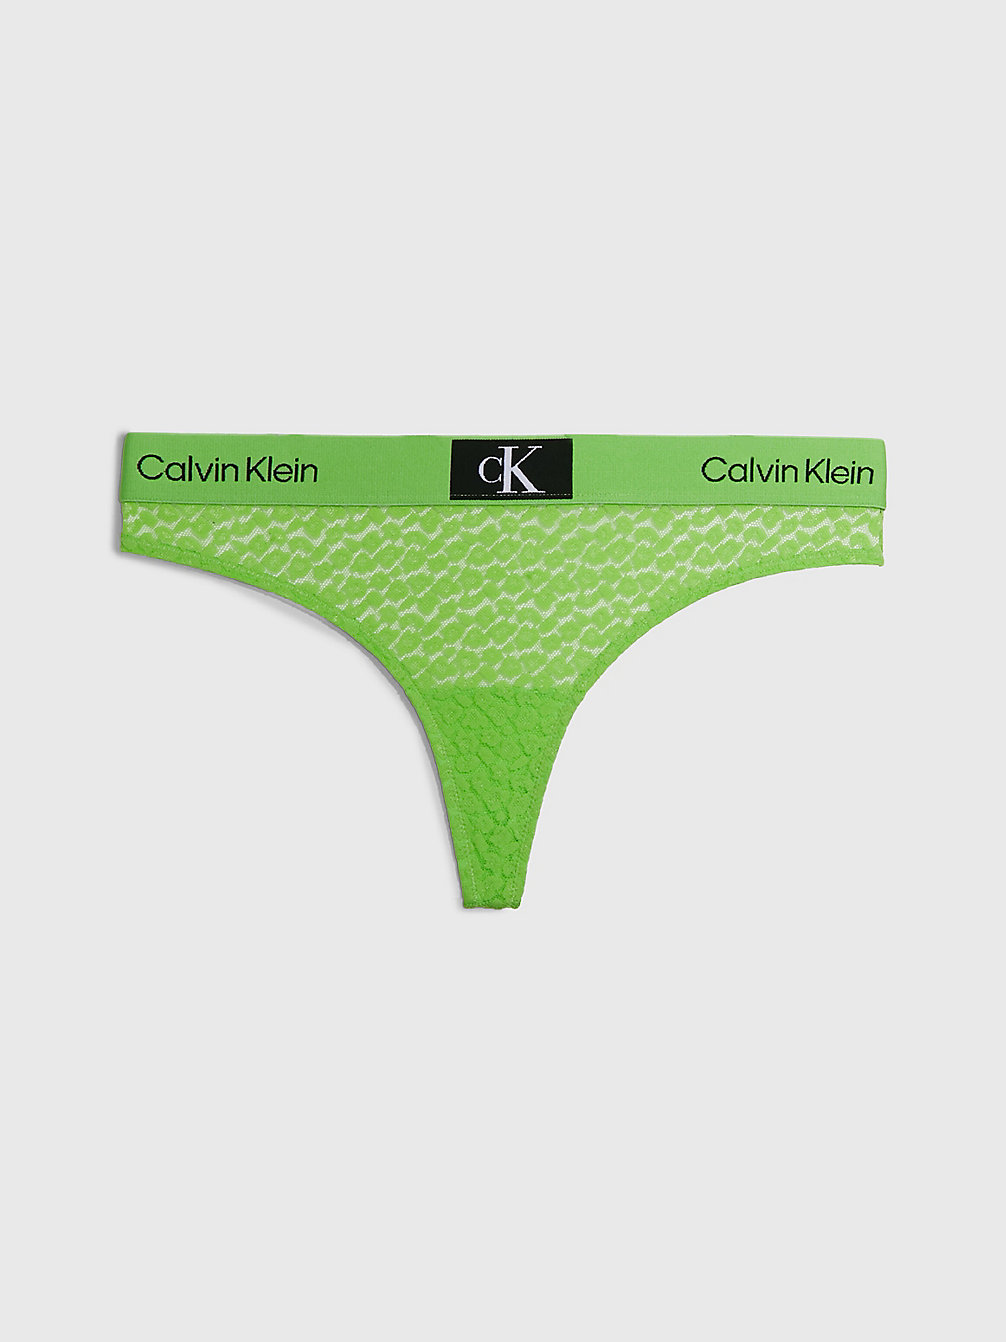 FABULOUS GREEN Lace Thong - Ck96 undefined women Calvin Klein